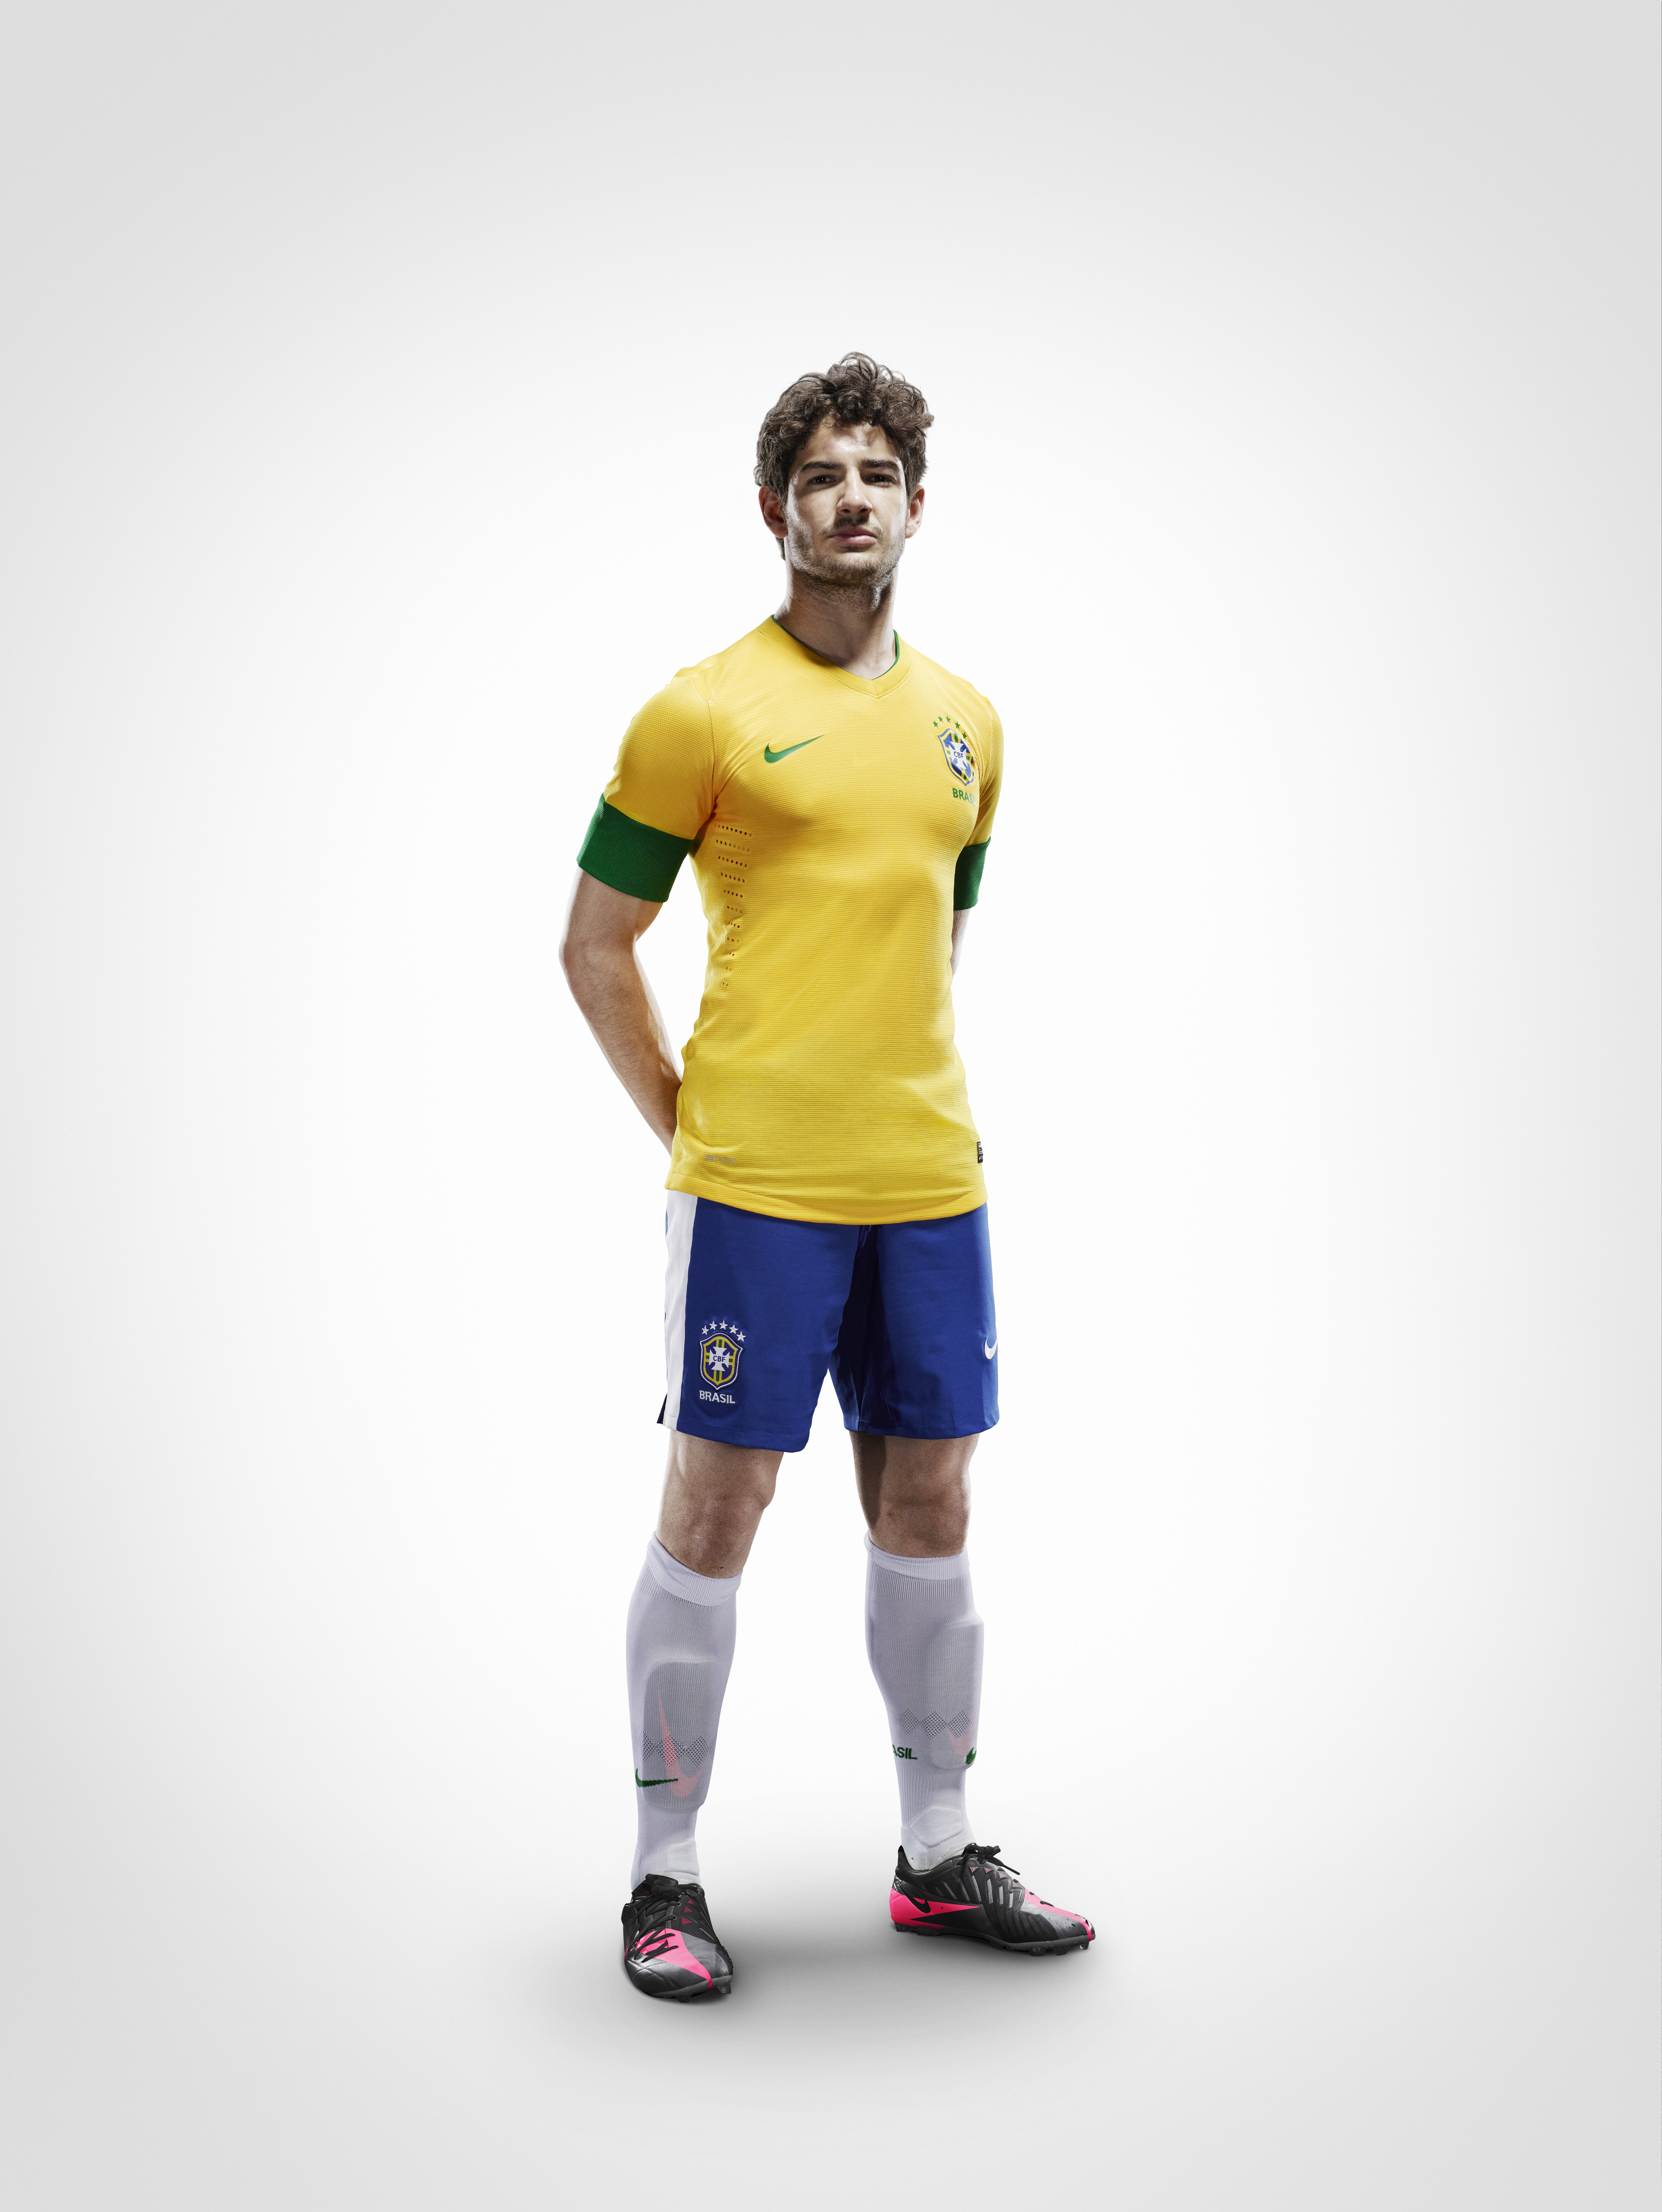 Nike Soccer 2012 Brazil National Team Jersey